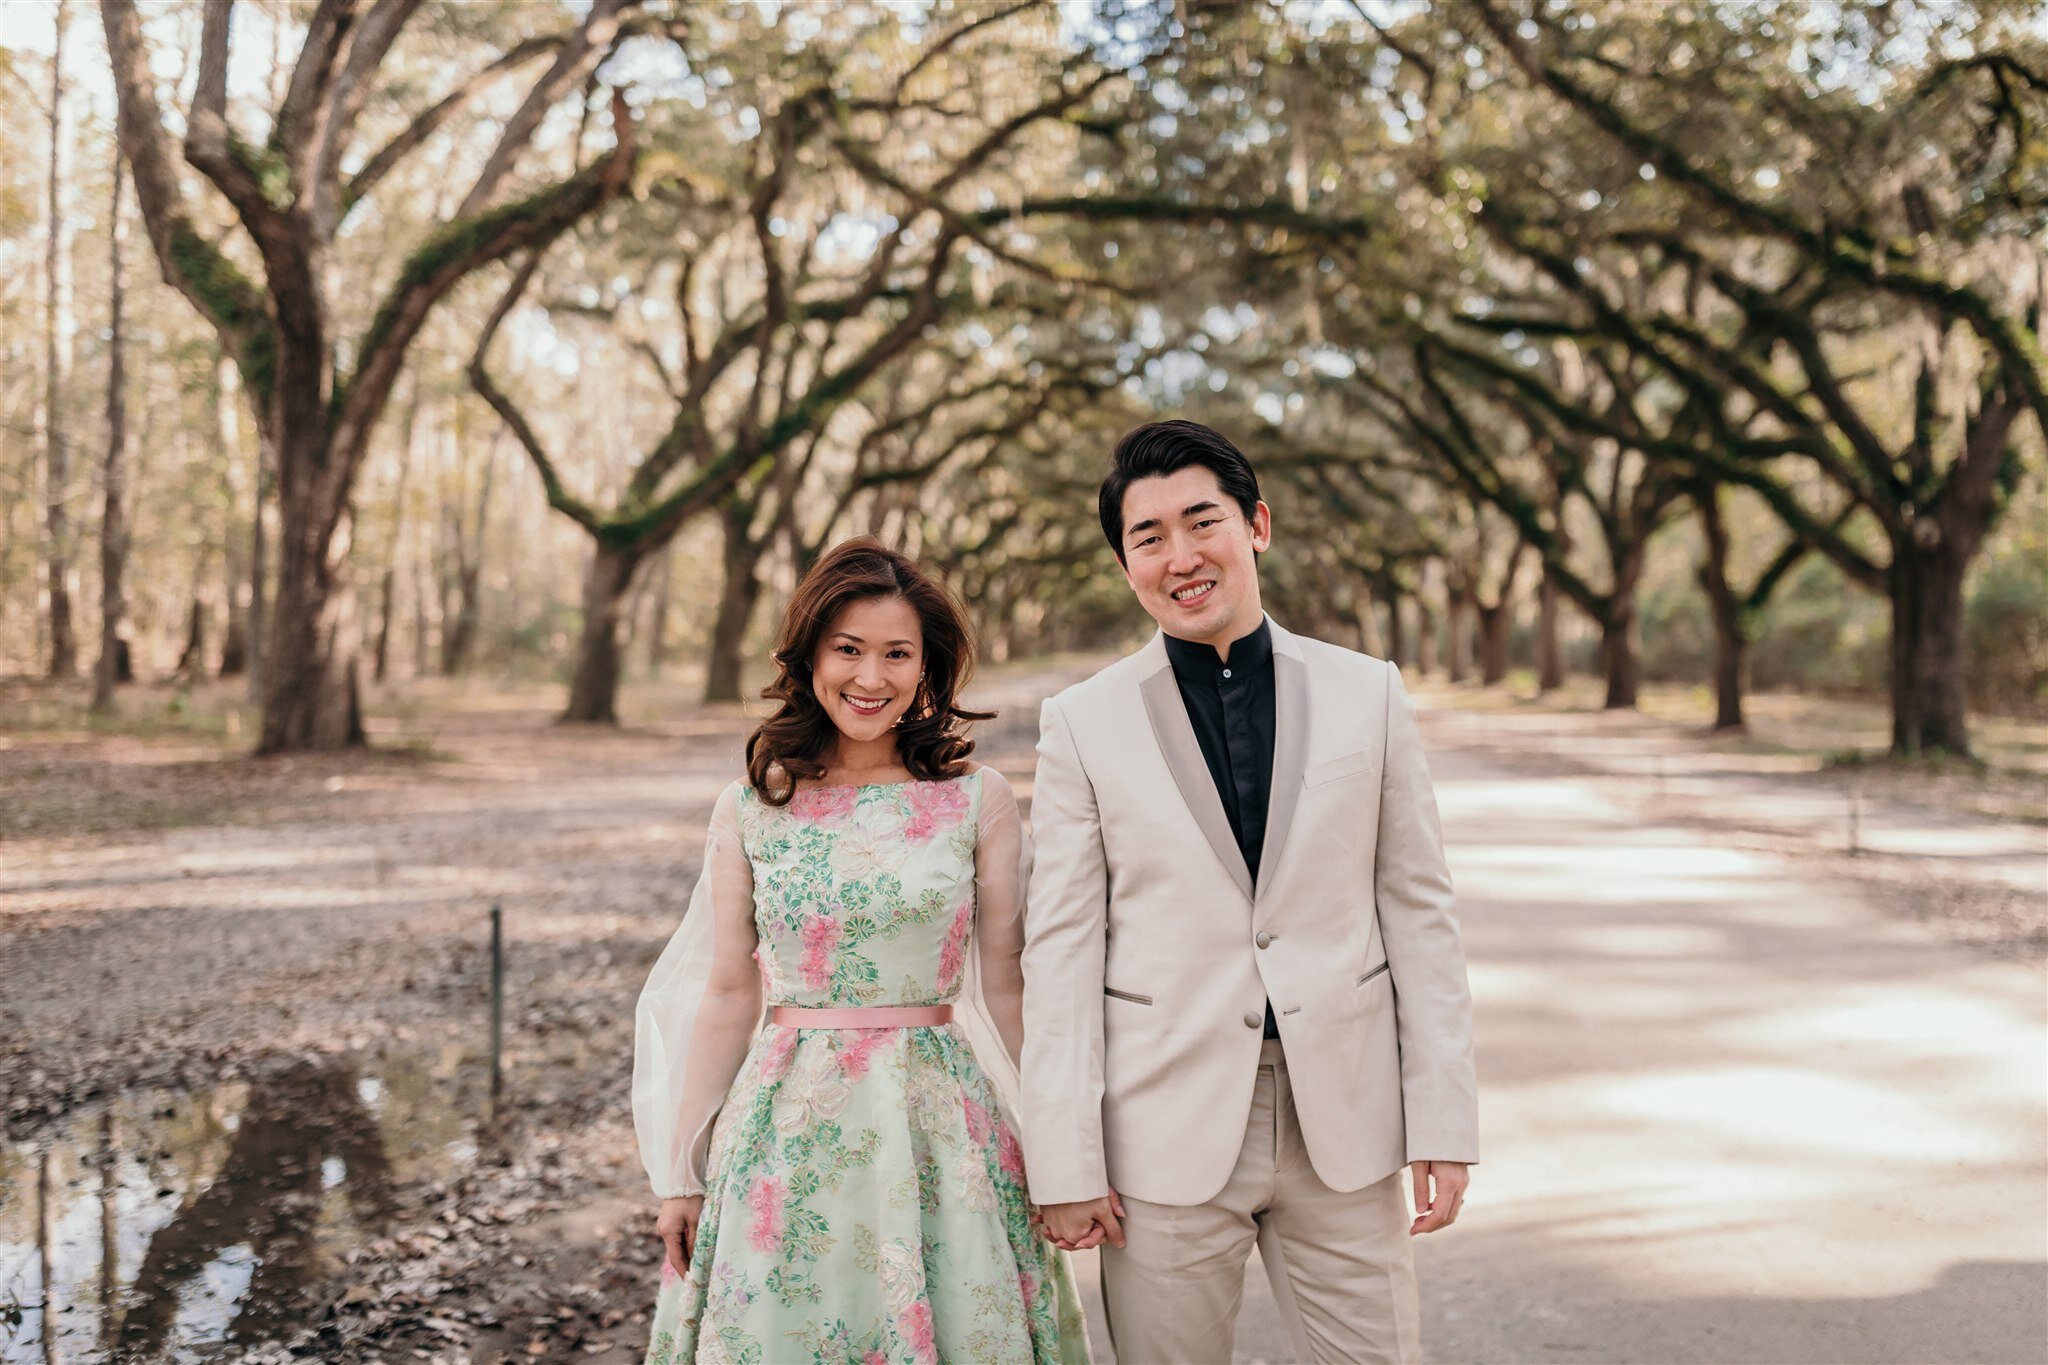 couple with historic savannah moss trees